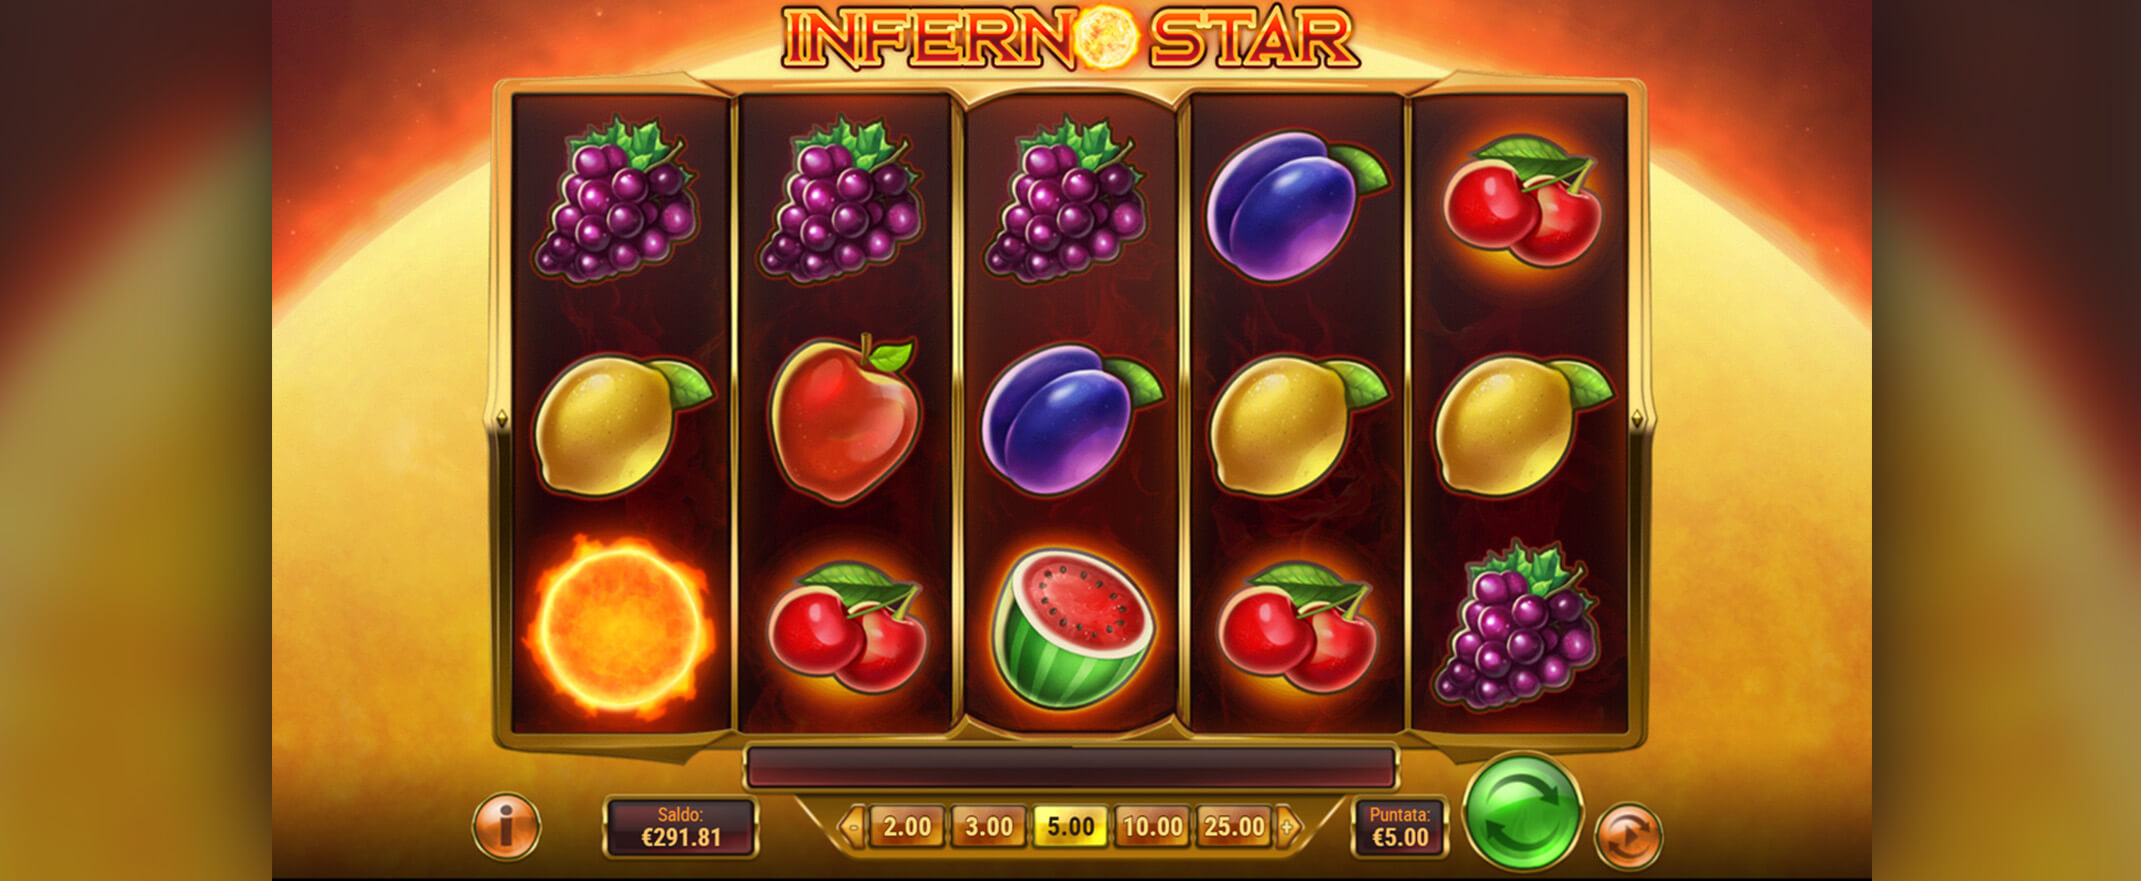 Inferno Star slot form Play'n Go